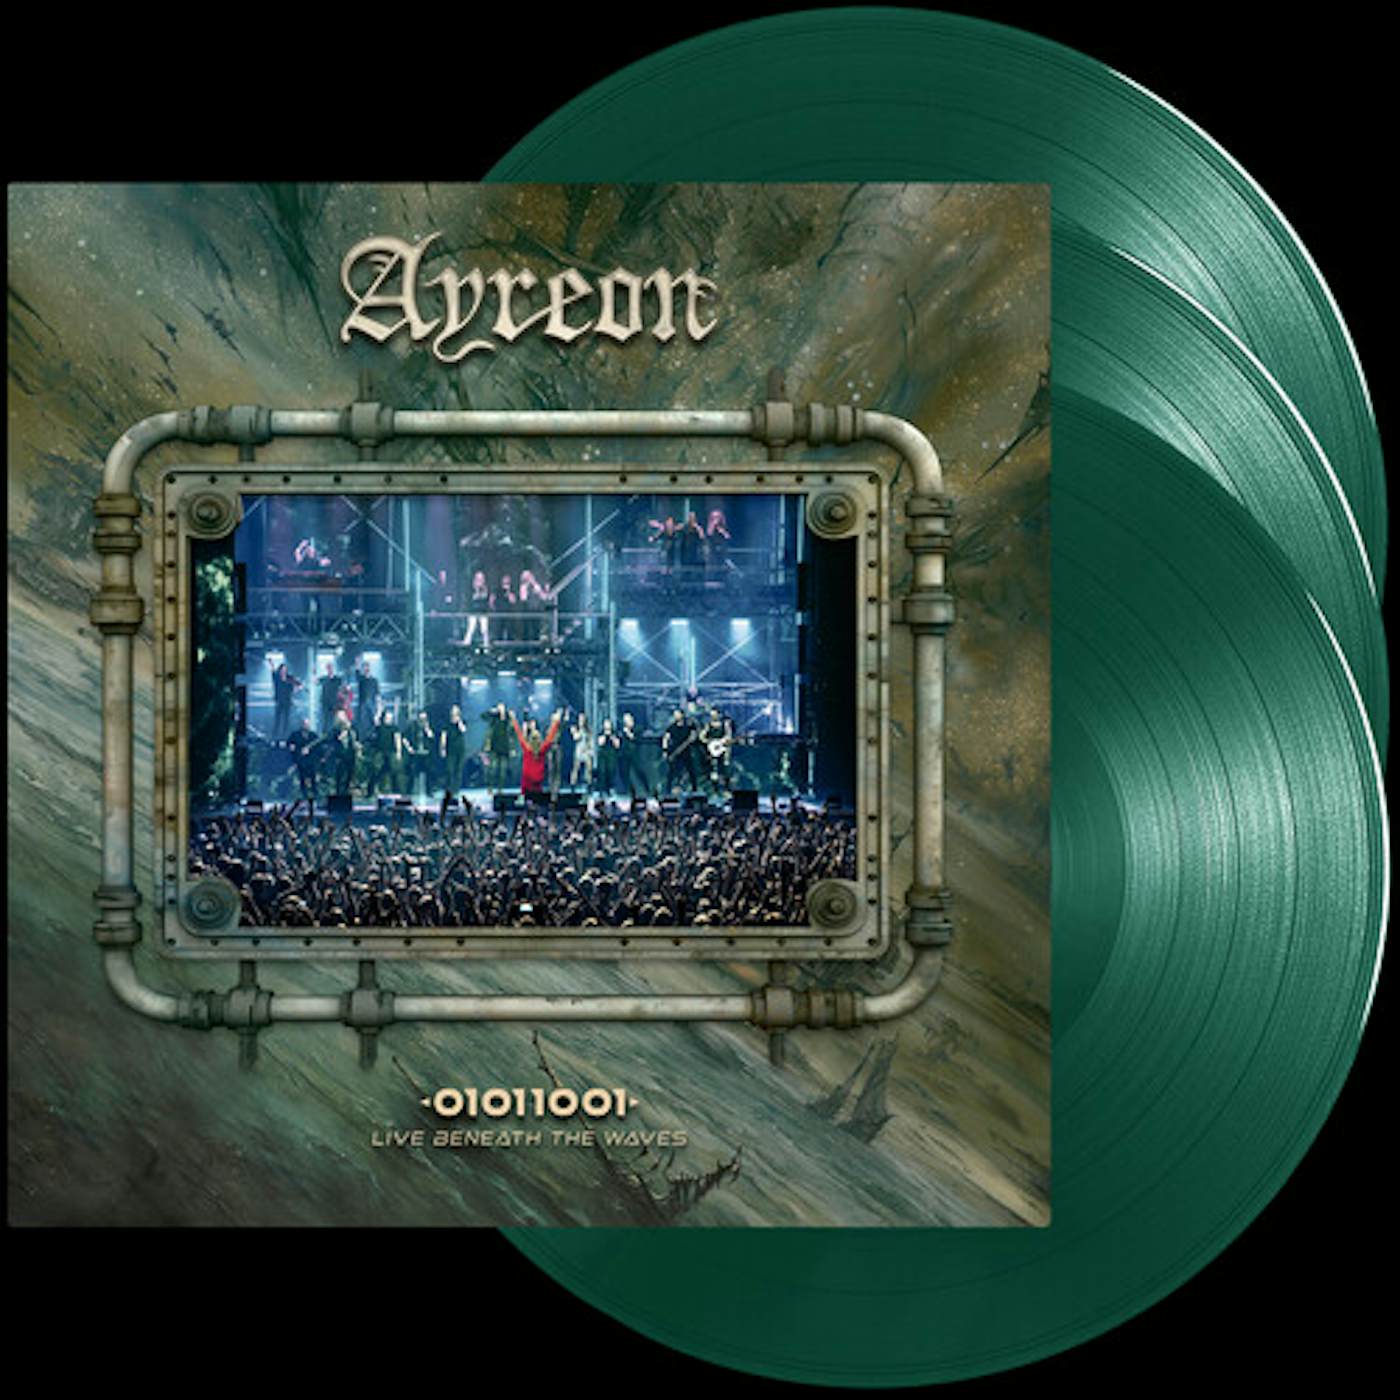 Ayreon 01011001 - LIVE BENEATH THE WAVES Vinyl Record - Bonus Vinyl, Green Vinyl